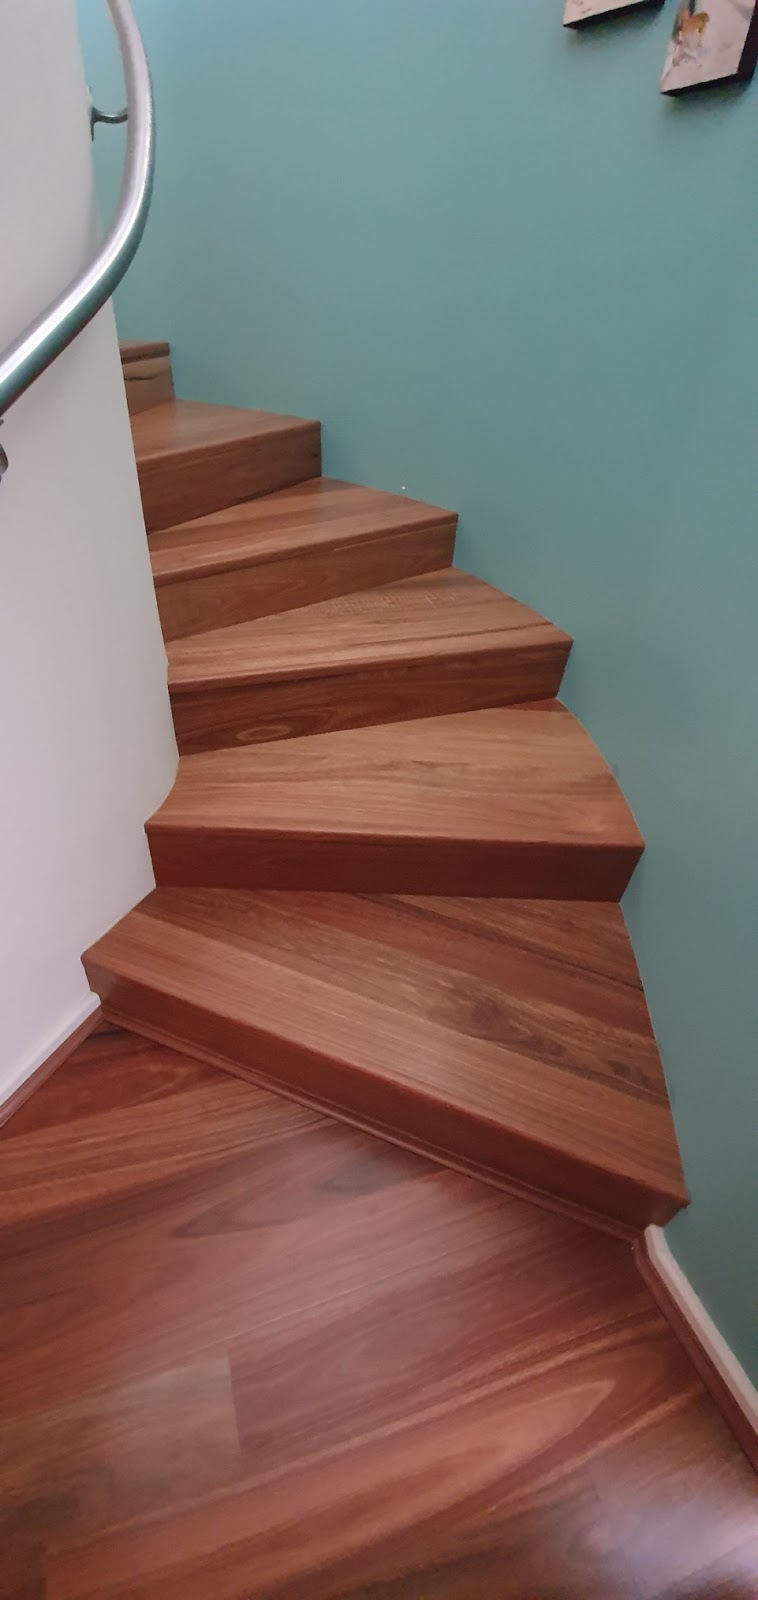 LayRite Timber Flooring | general contractor | 4 Ashdown Wy, Hilbert WA 6112, Australia | 0432409180 OR +61 432 409 180